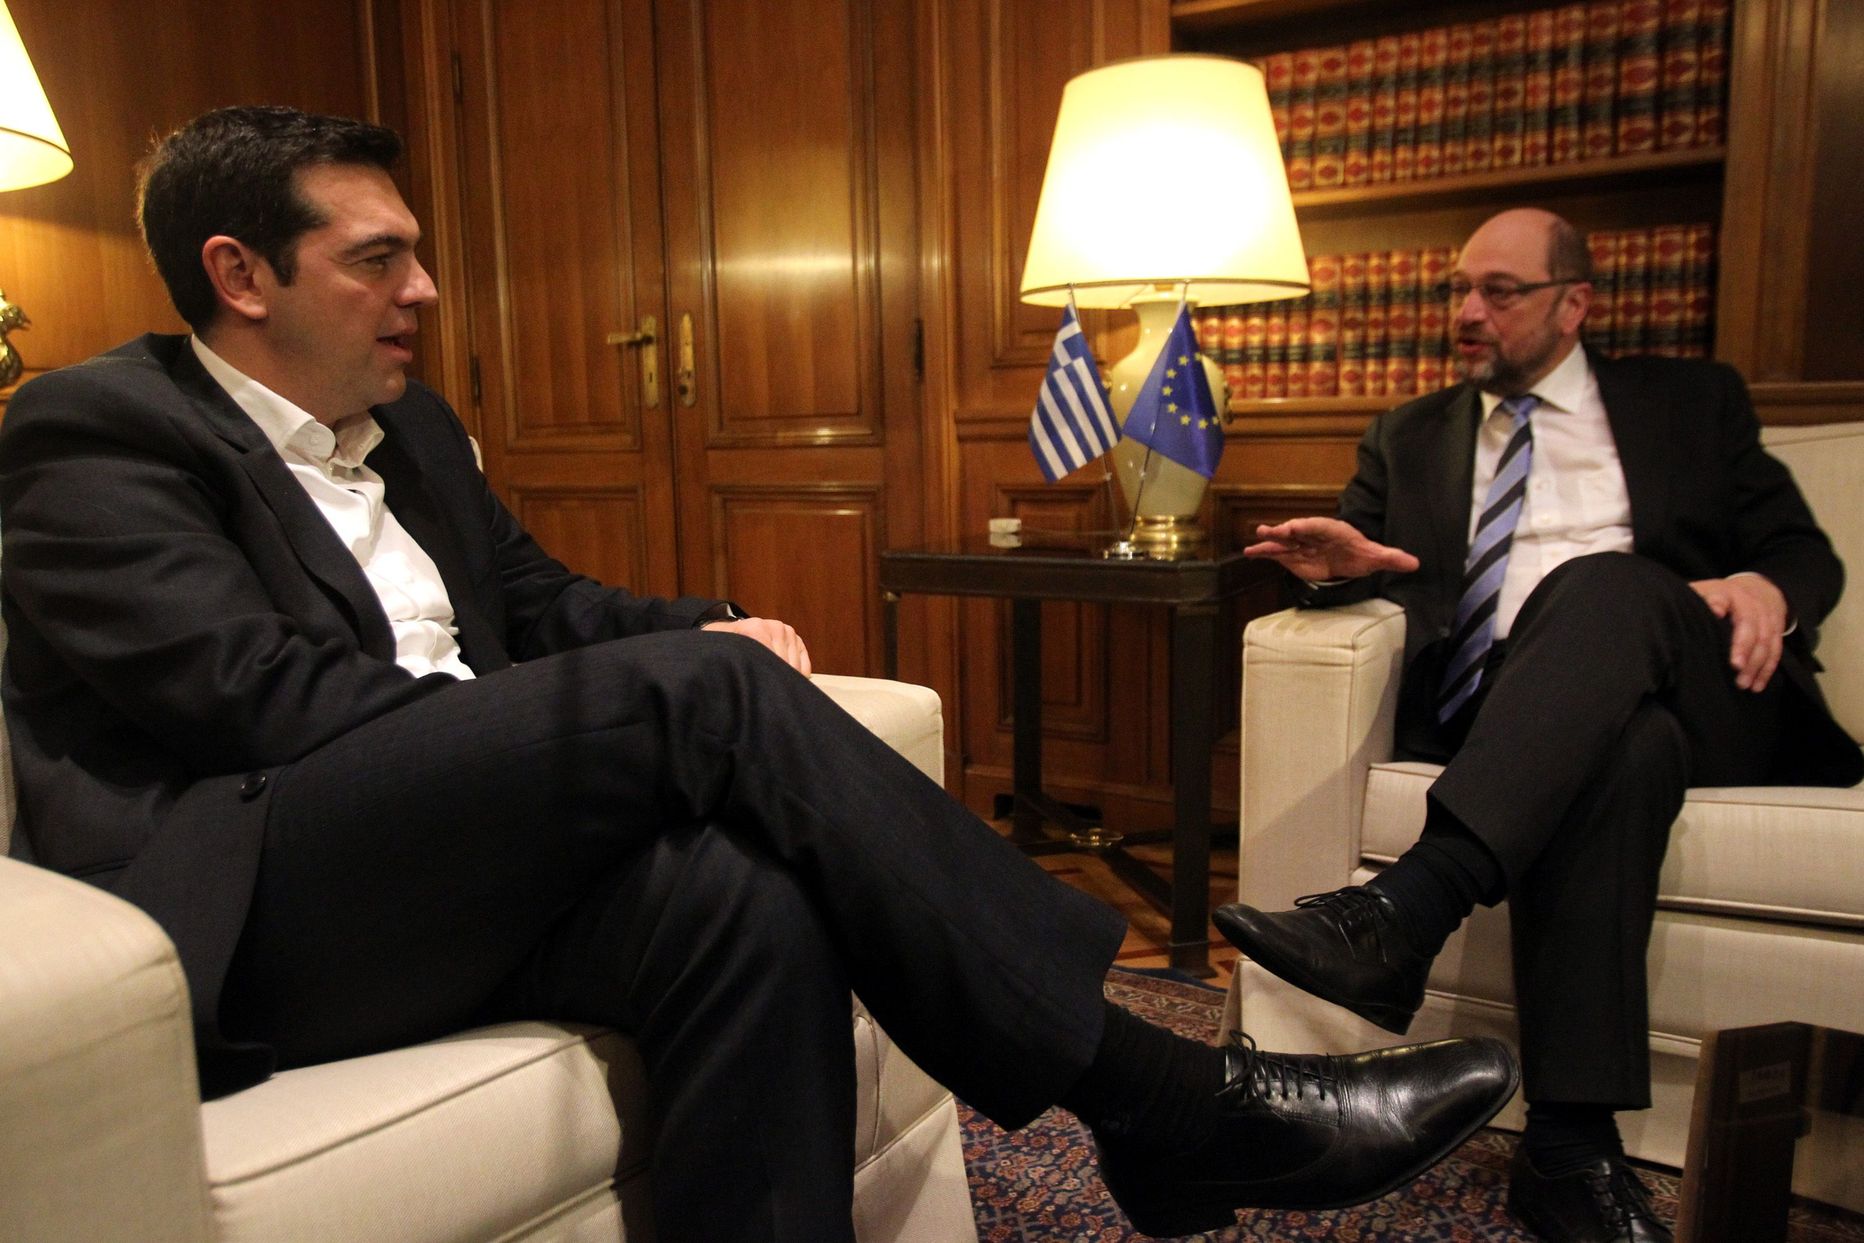 Kreeka peaminister Alexis Tsipras (vasakul) ja Euroopa parlamendi president Martin Schulz.